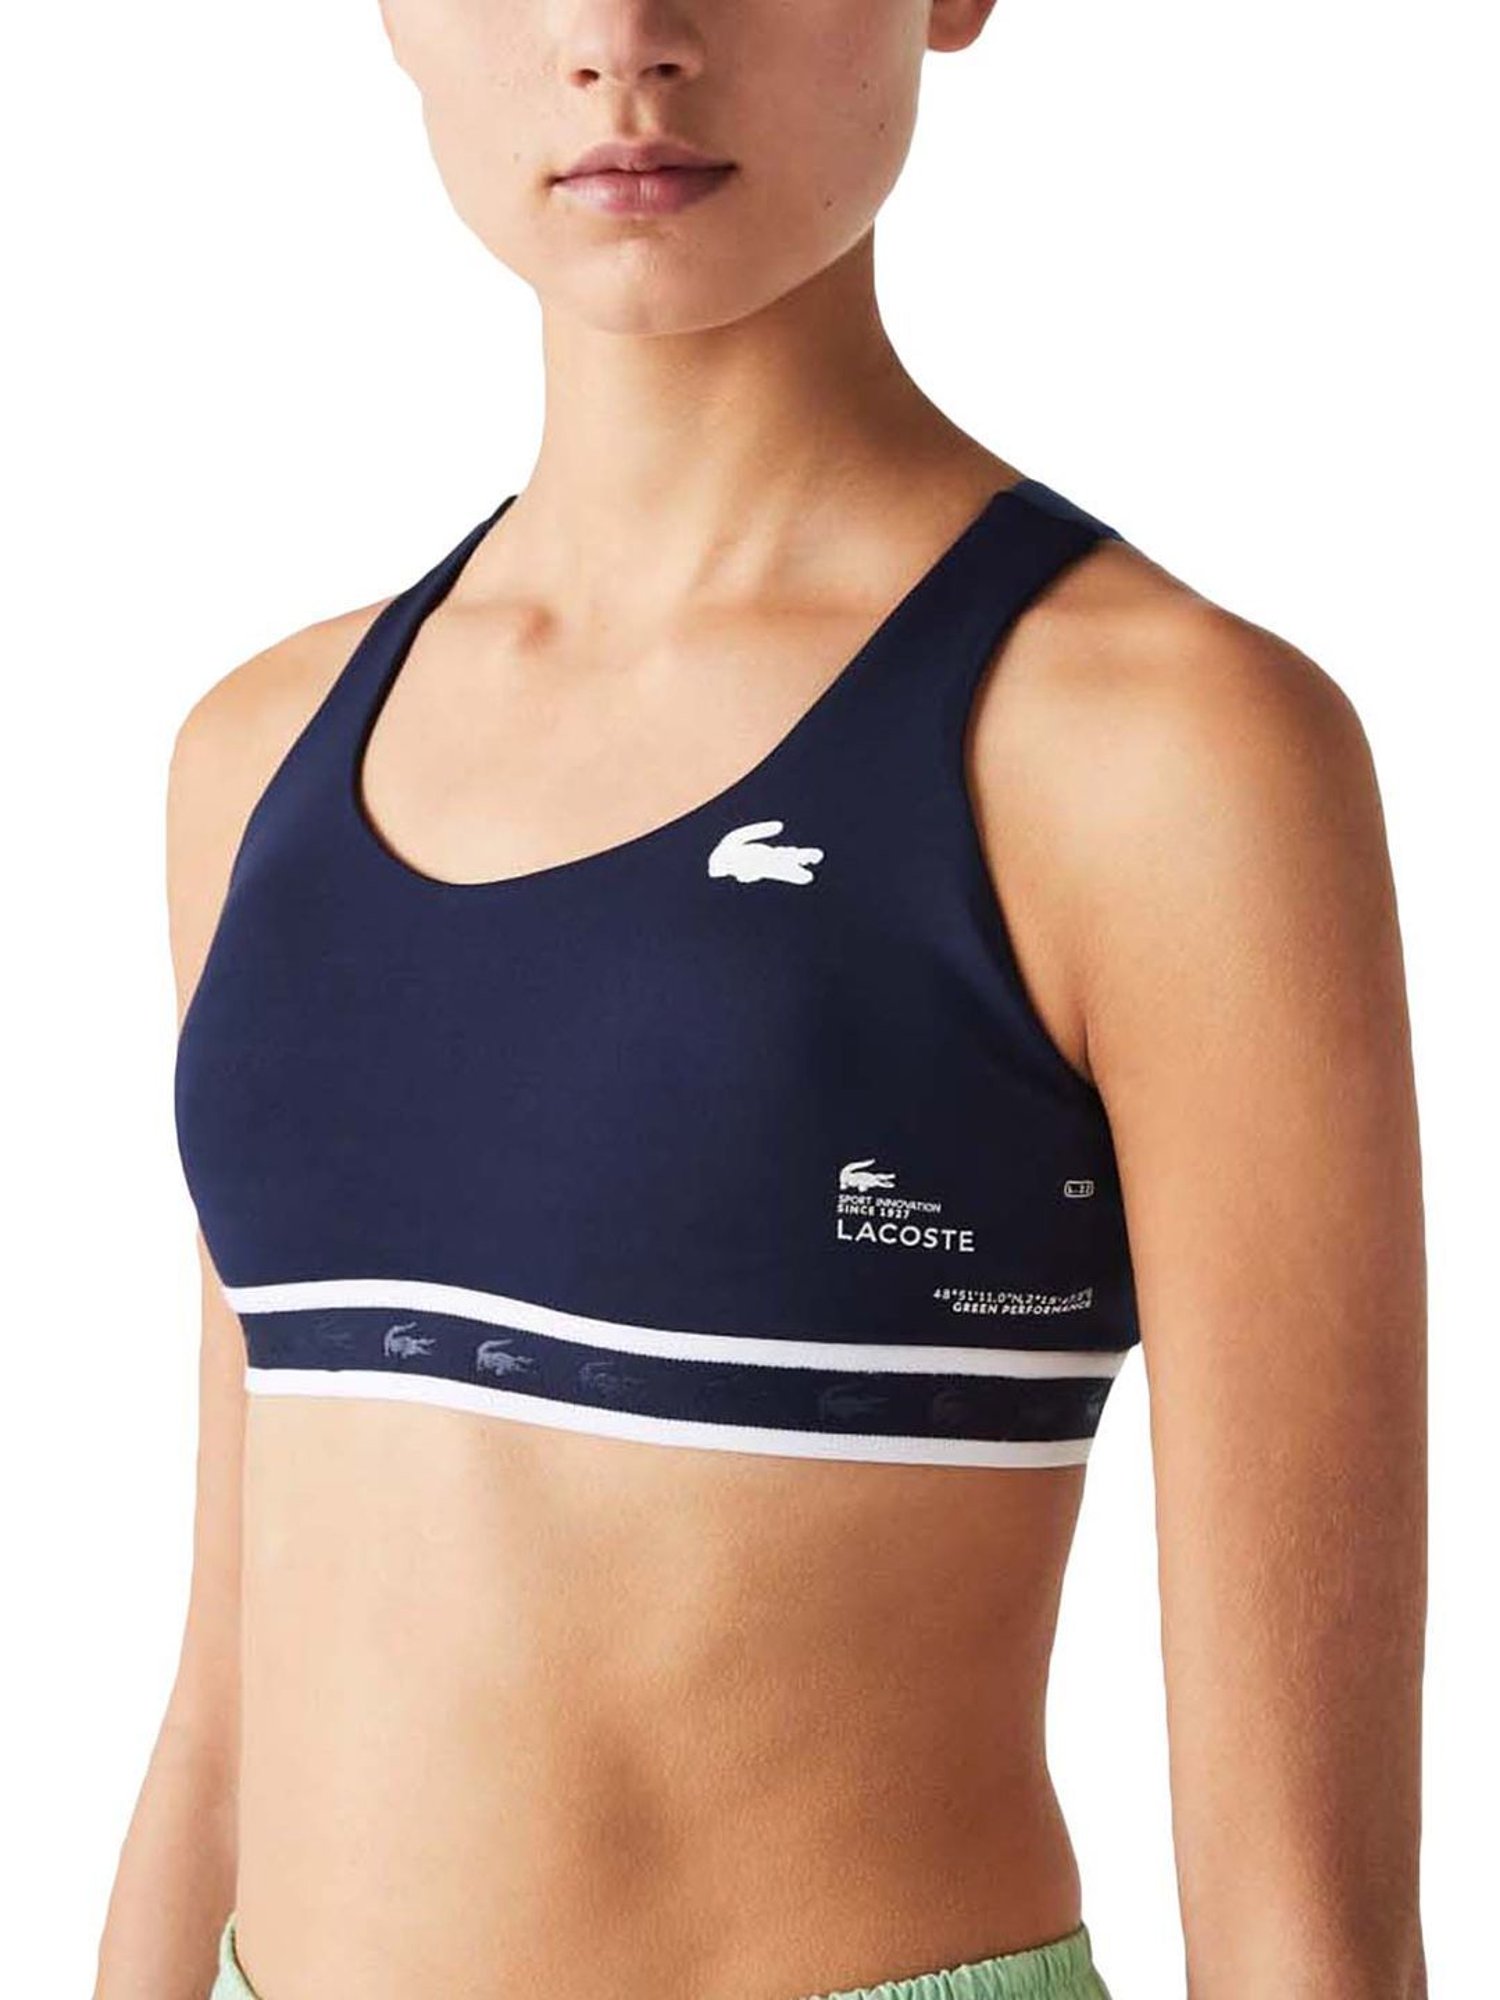 Lacoste Sport Medium support sports bra - navy blue/dark blue